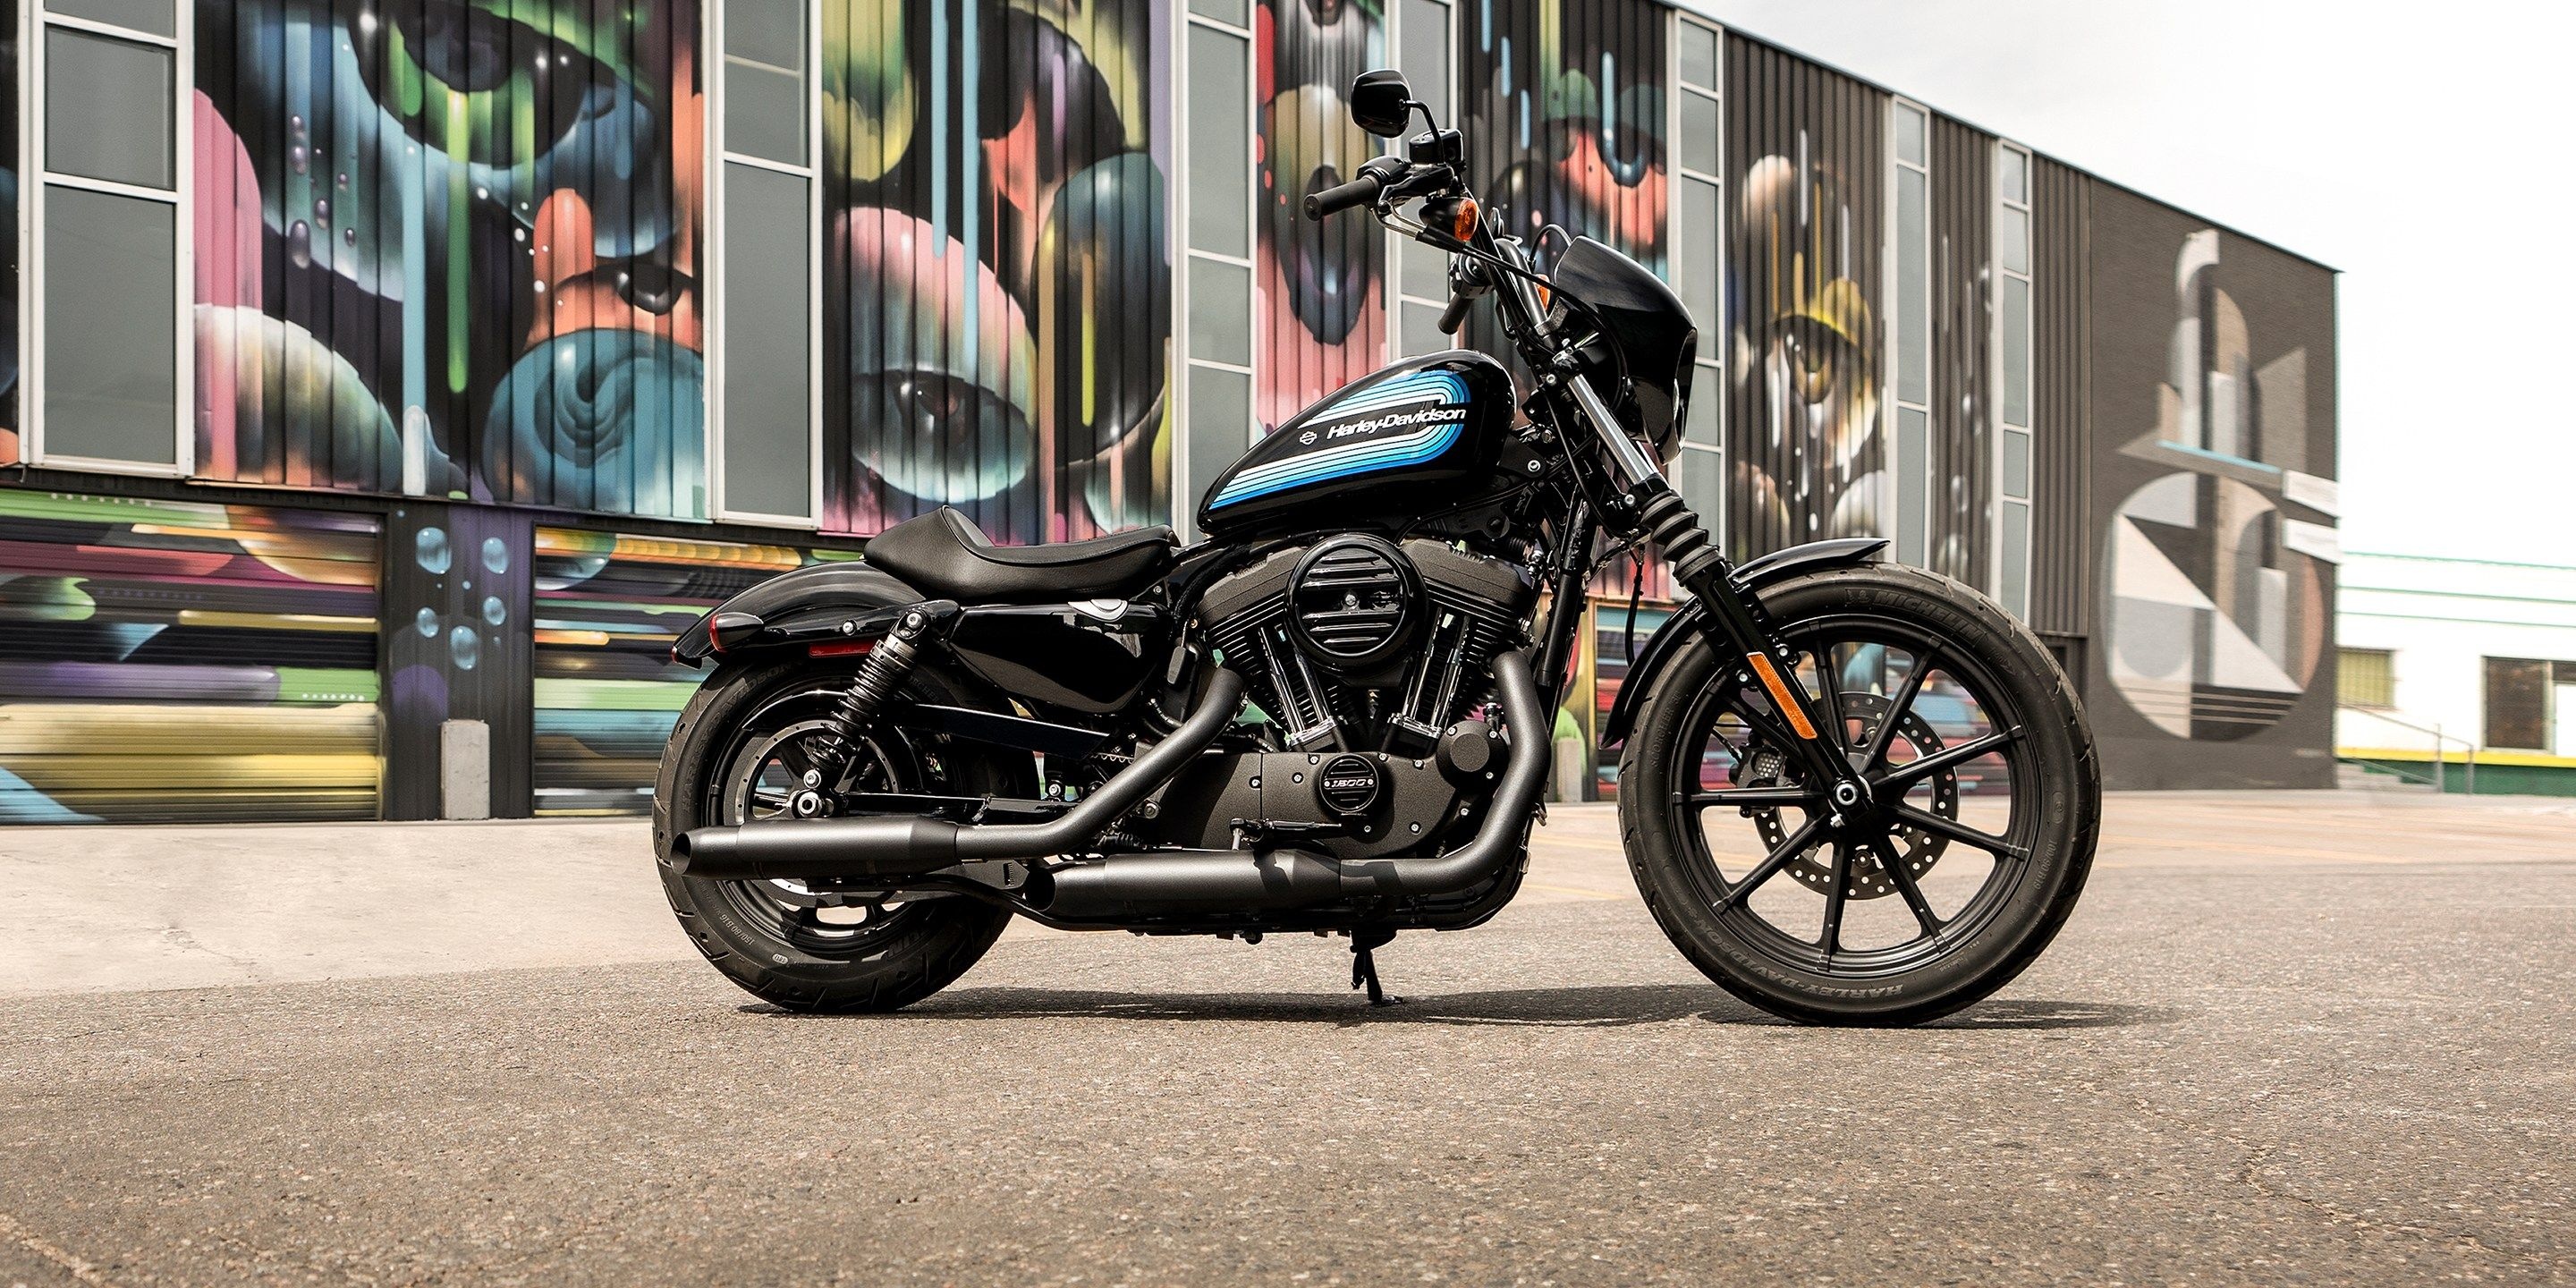 Harley Davidson Iron Wallpapers - Top Free Harley Davidson Iron Backgrounds 2880x1440